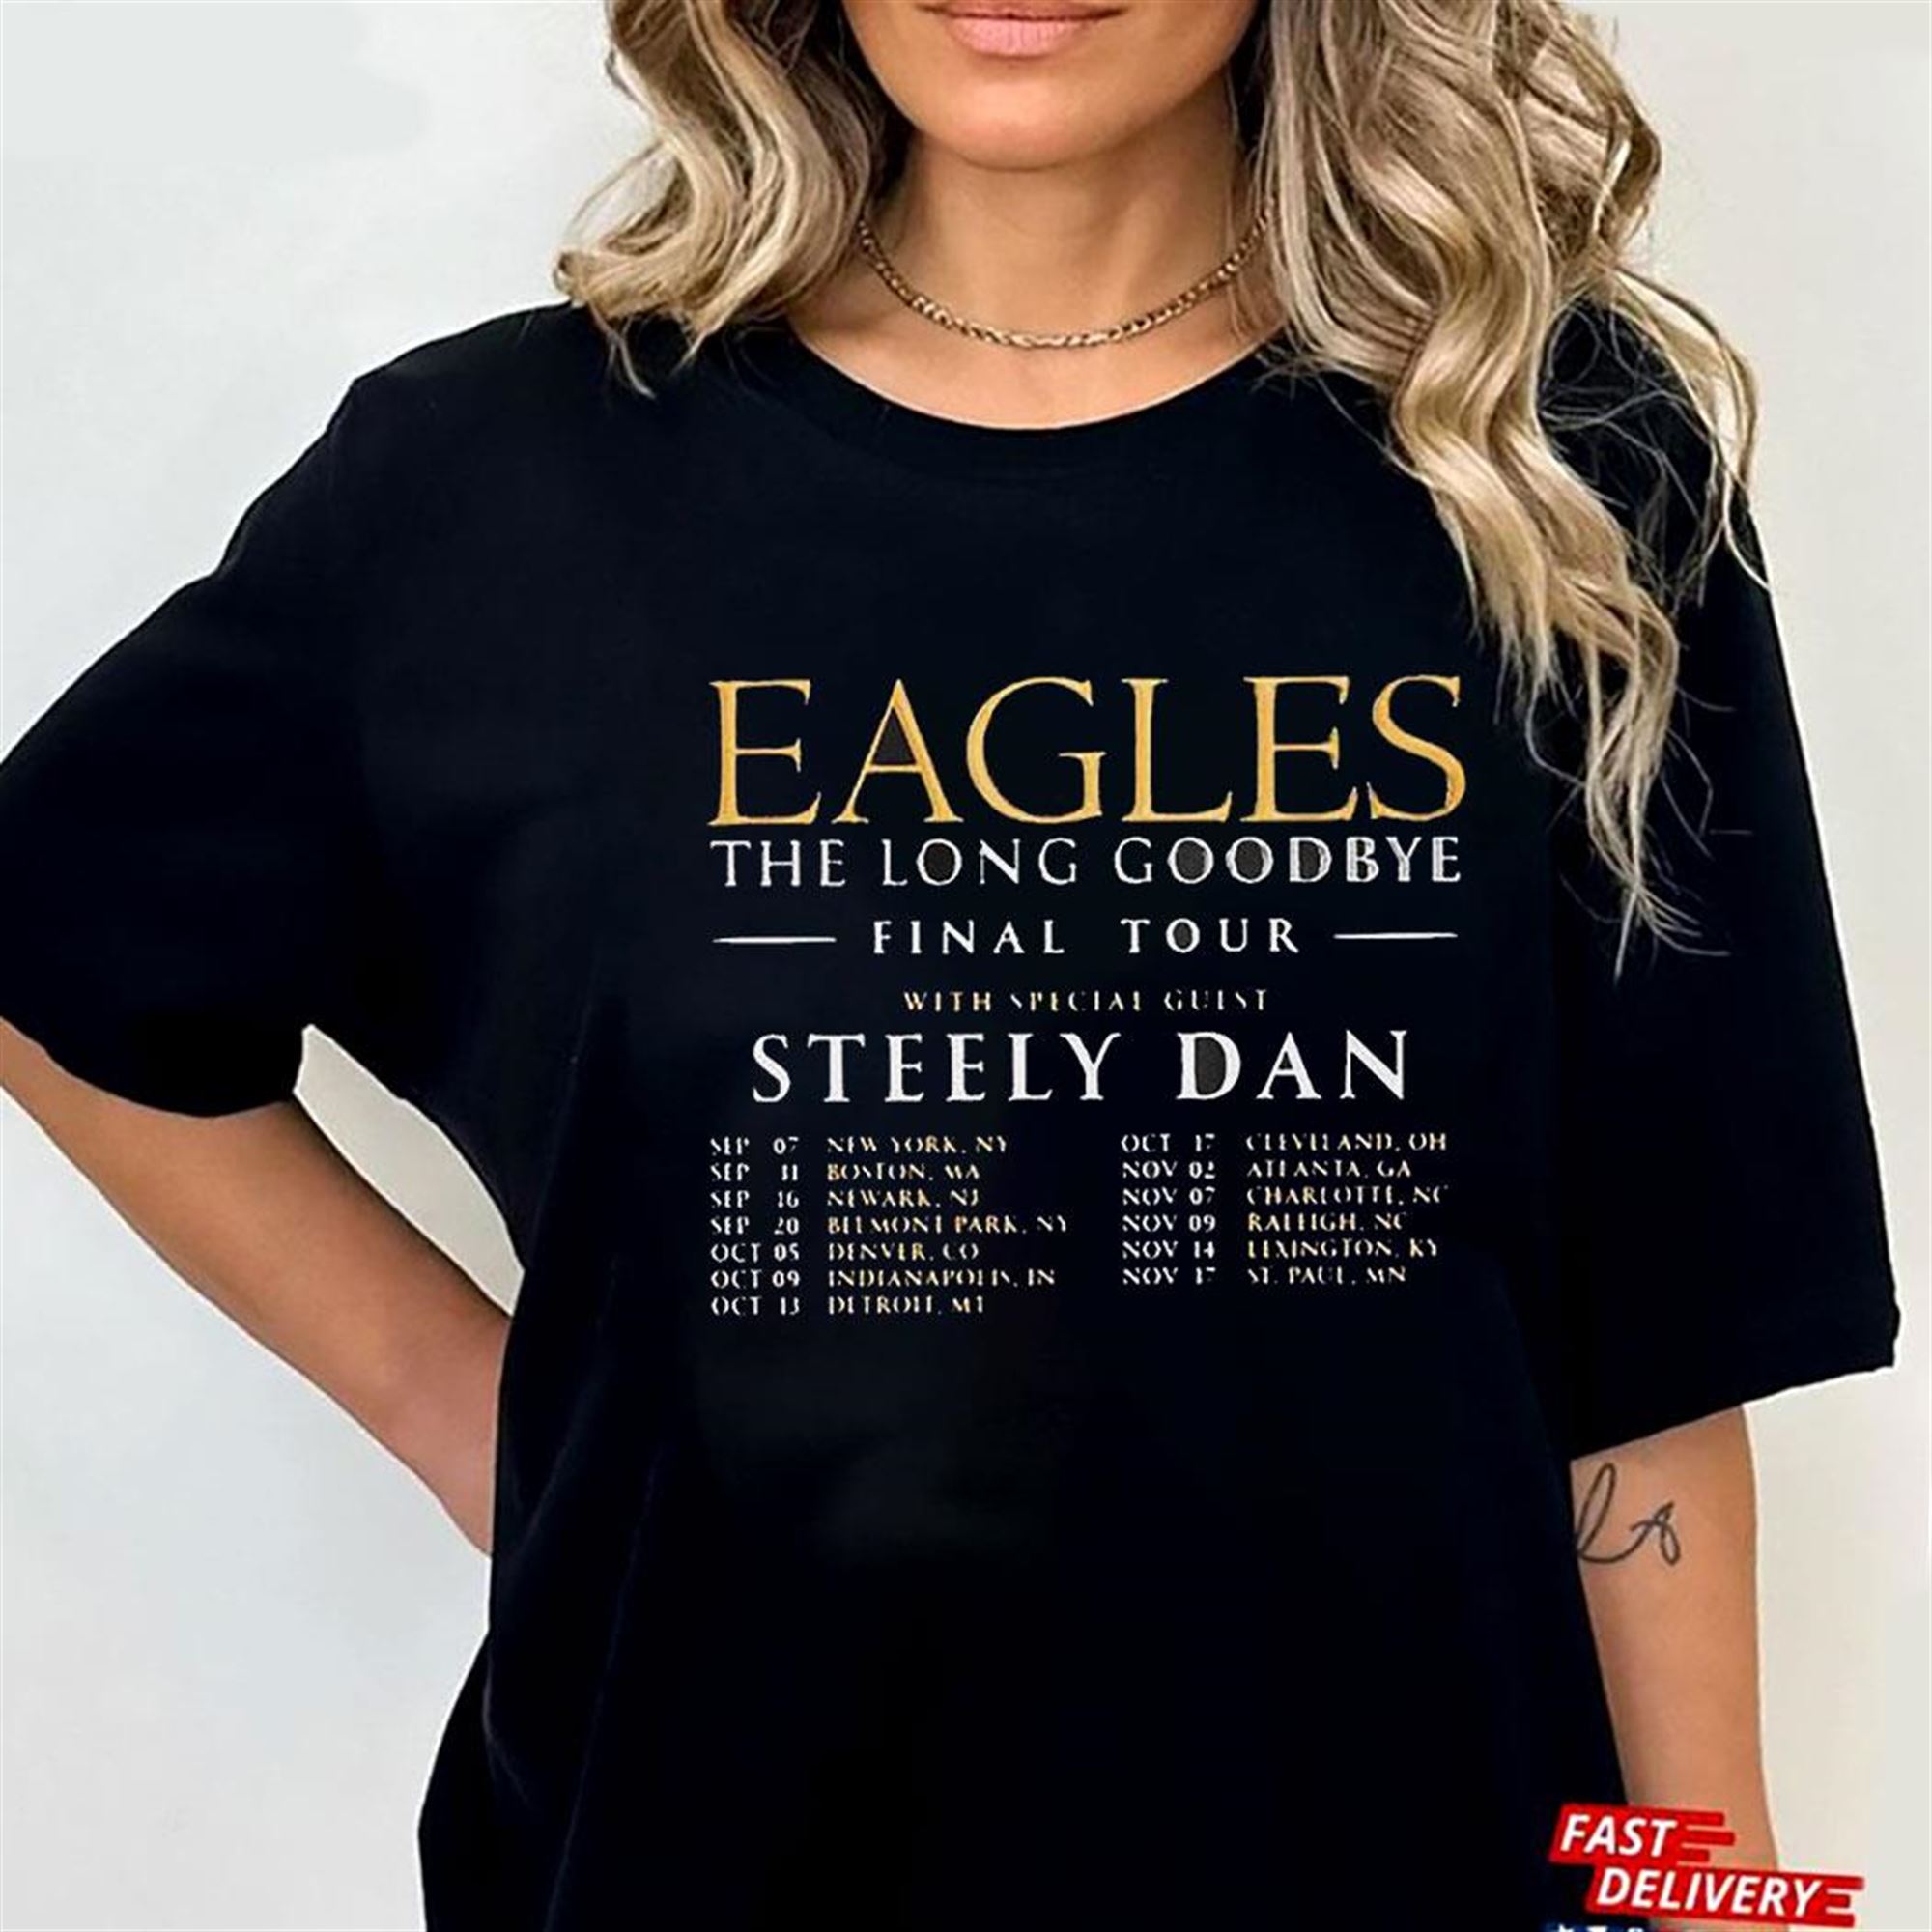 Eagles Band T-Shirts & T-Shirt Designs